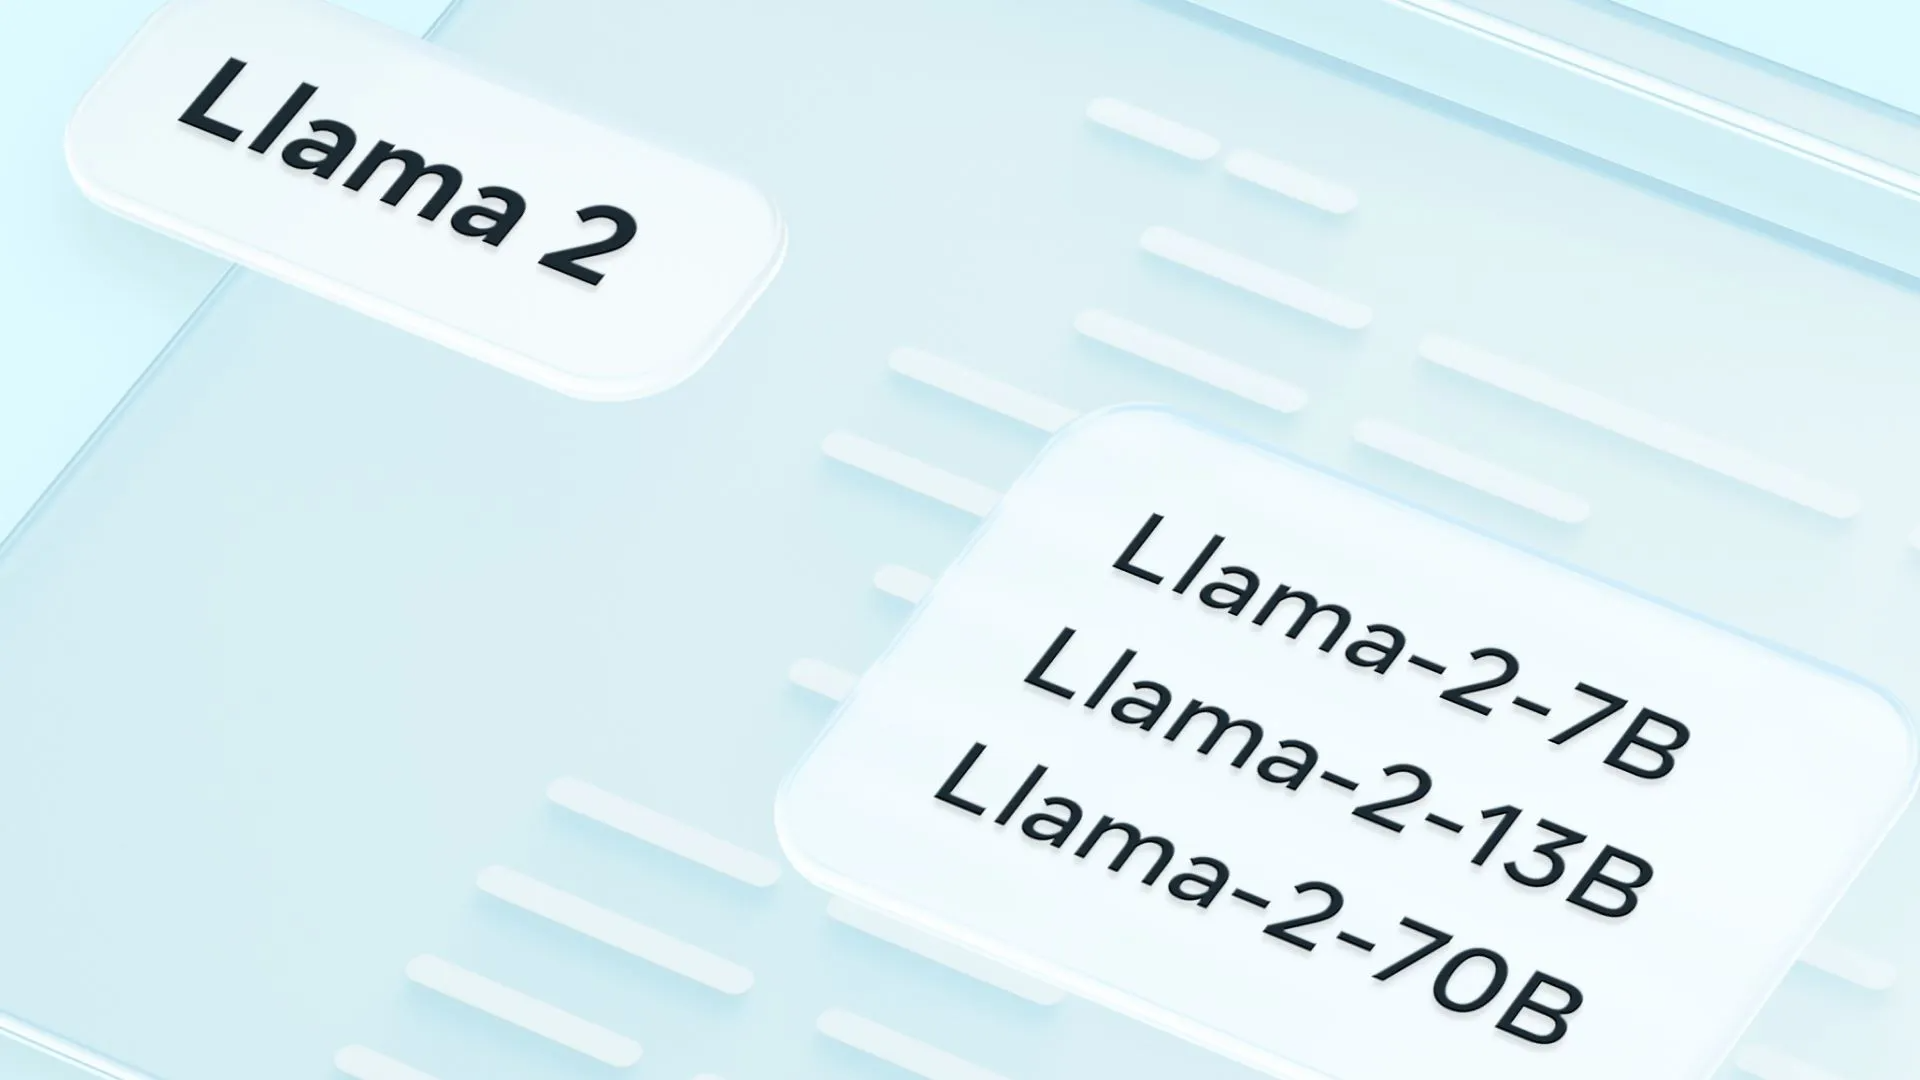 Заголовок Llama 2, показывающий Llama 2 7B, Llama 2 13B и Llama 2 70B.